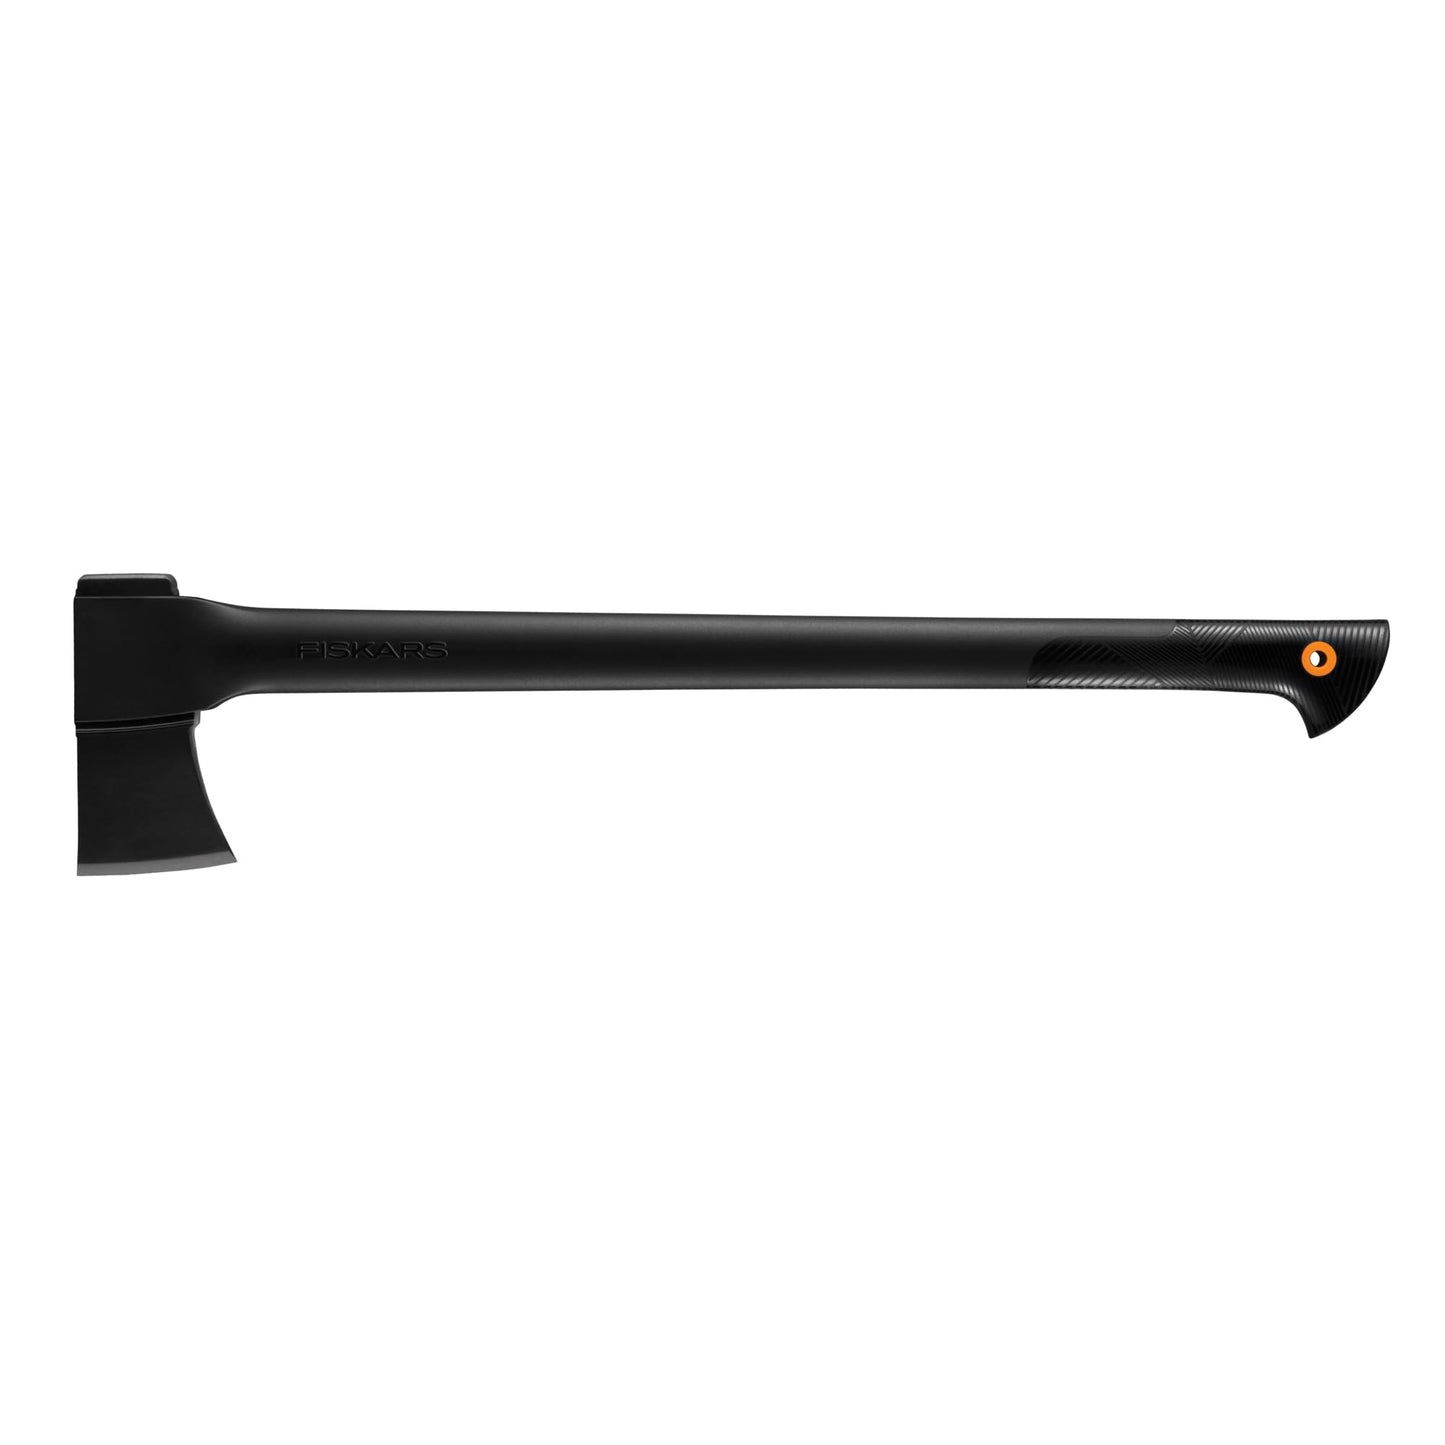 Fiskars 28" Chopping Axe - Ultra-Sharp Blade for Felling Trees - Garden and Outdoor Gear - Black